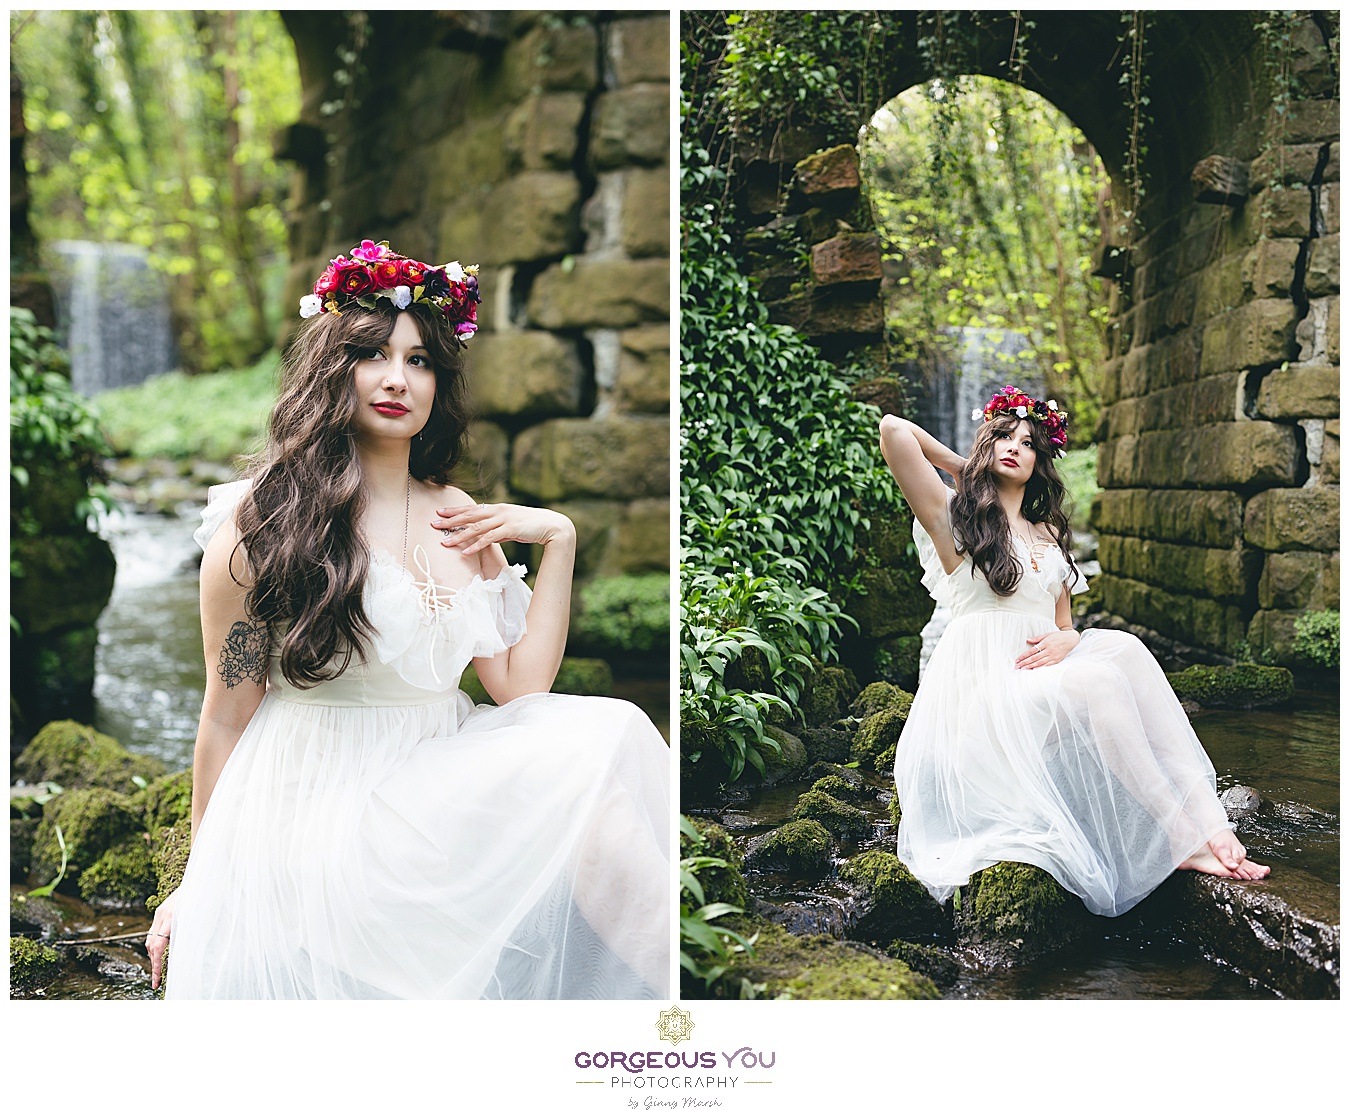 Feminine white tulle dress, wearing a flower crown | Divine feminine goddess boudoir photoshoot | Gorgeous You Photography | North Yorkshire